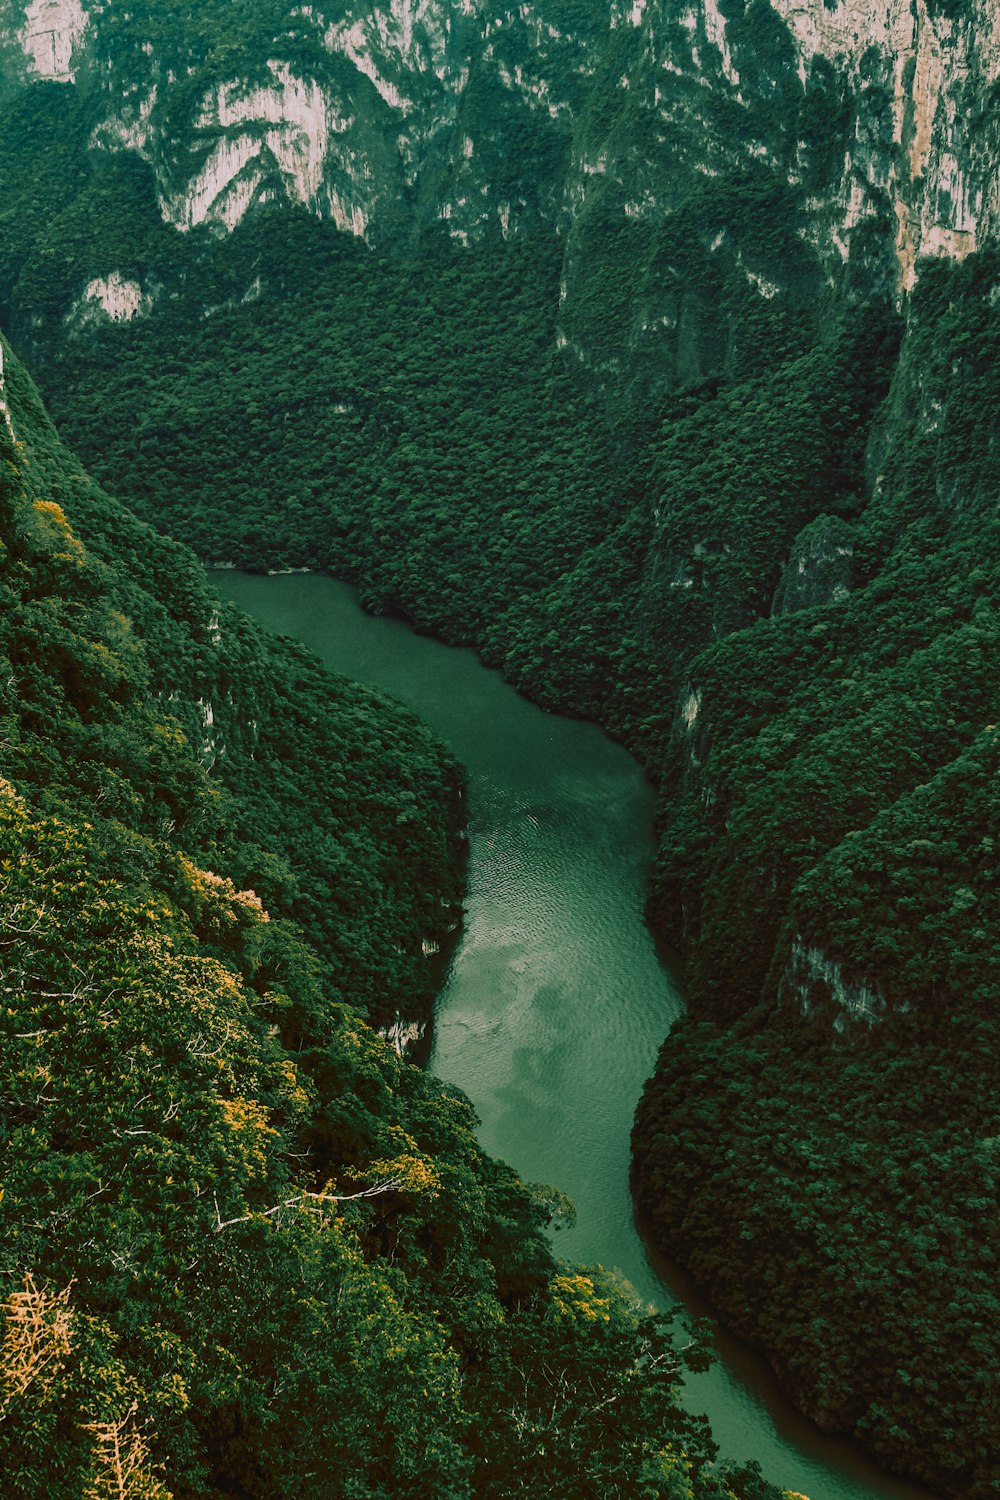 fiume tra rocce ricoperte di muschio verde